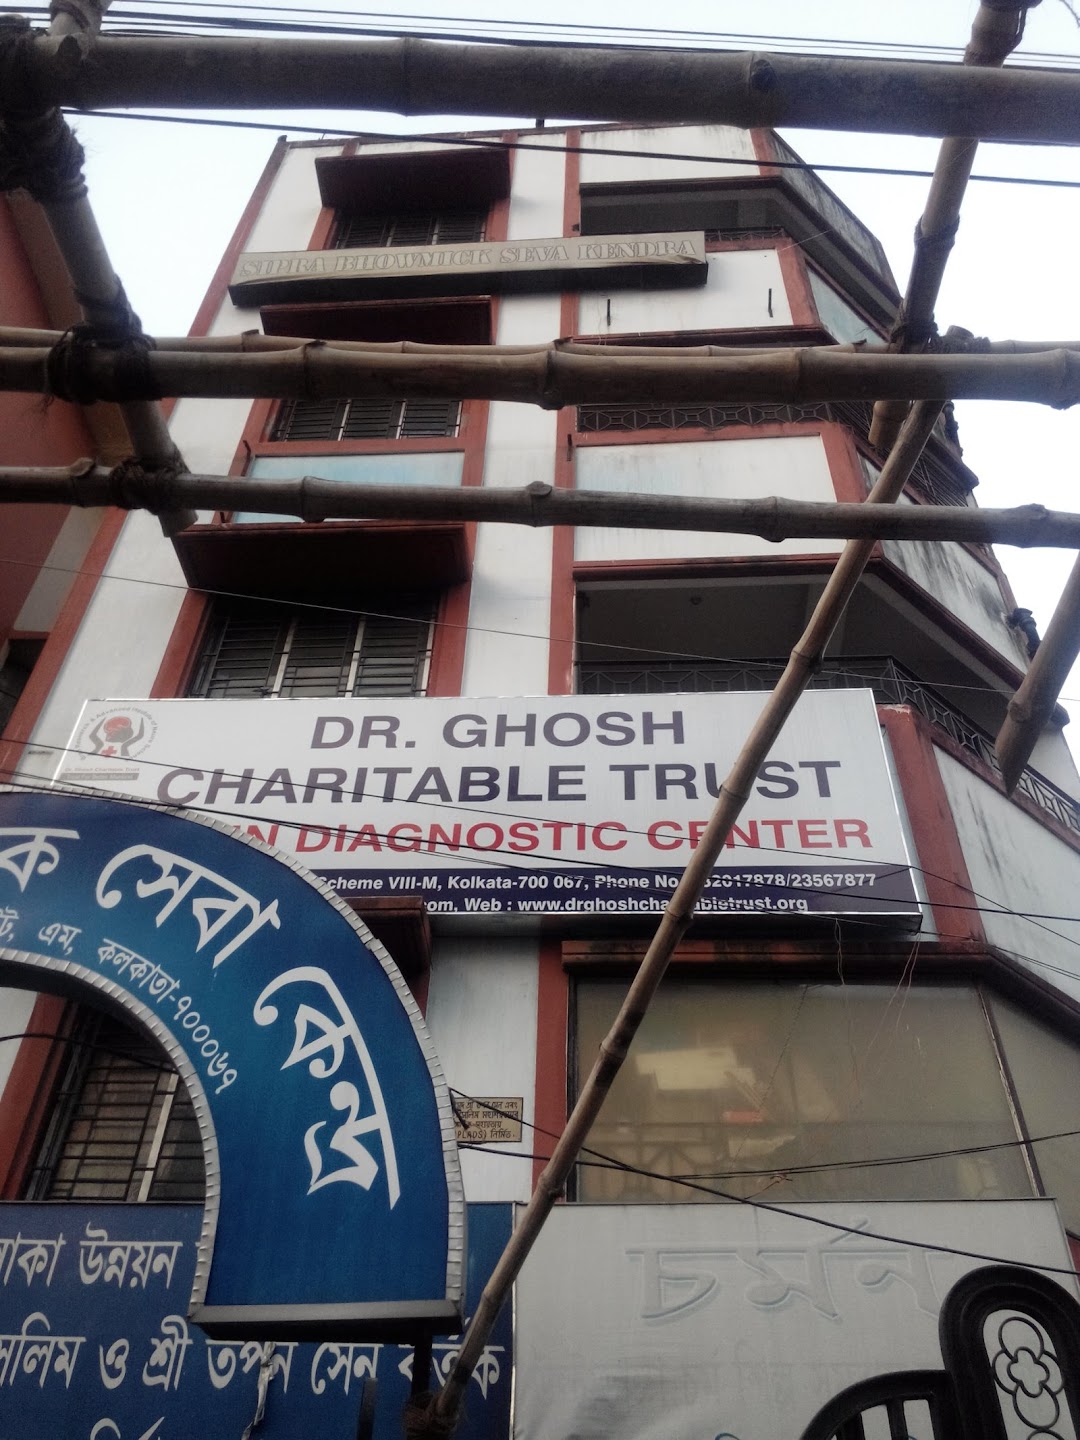 Dr. Ghosh Charitable Trust